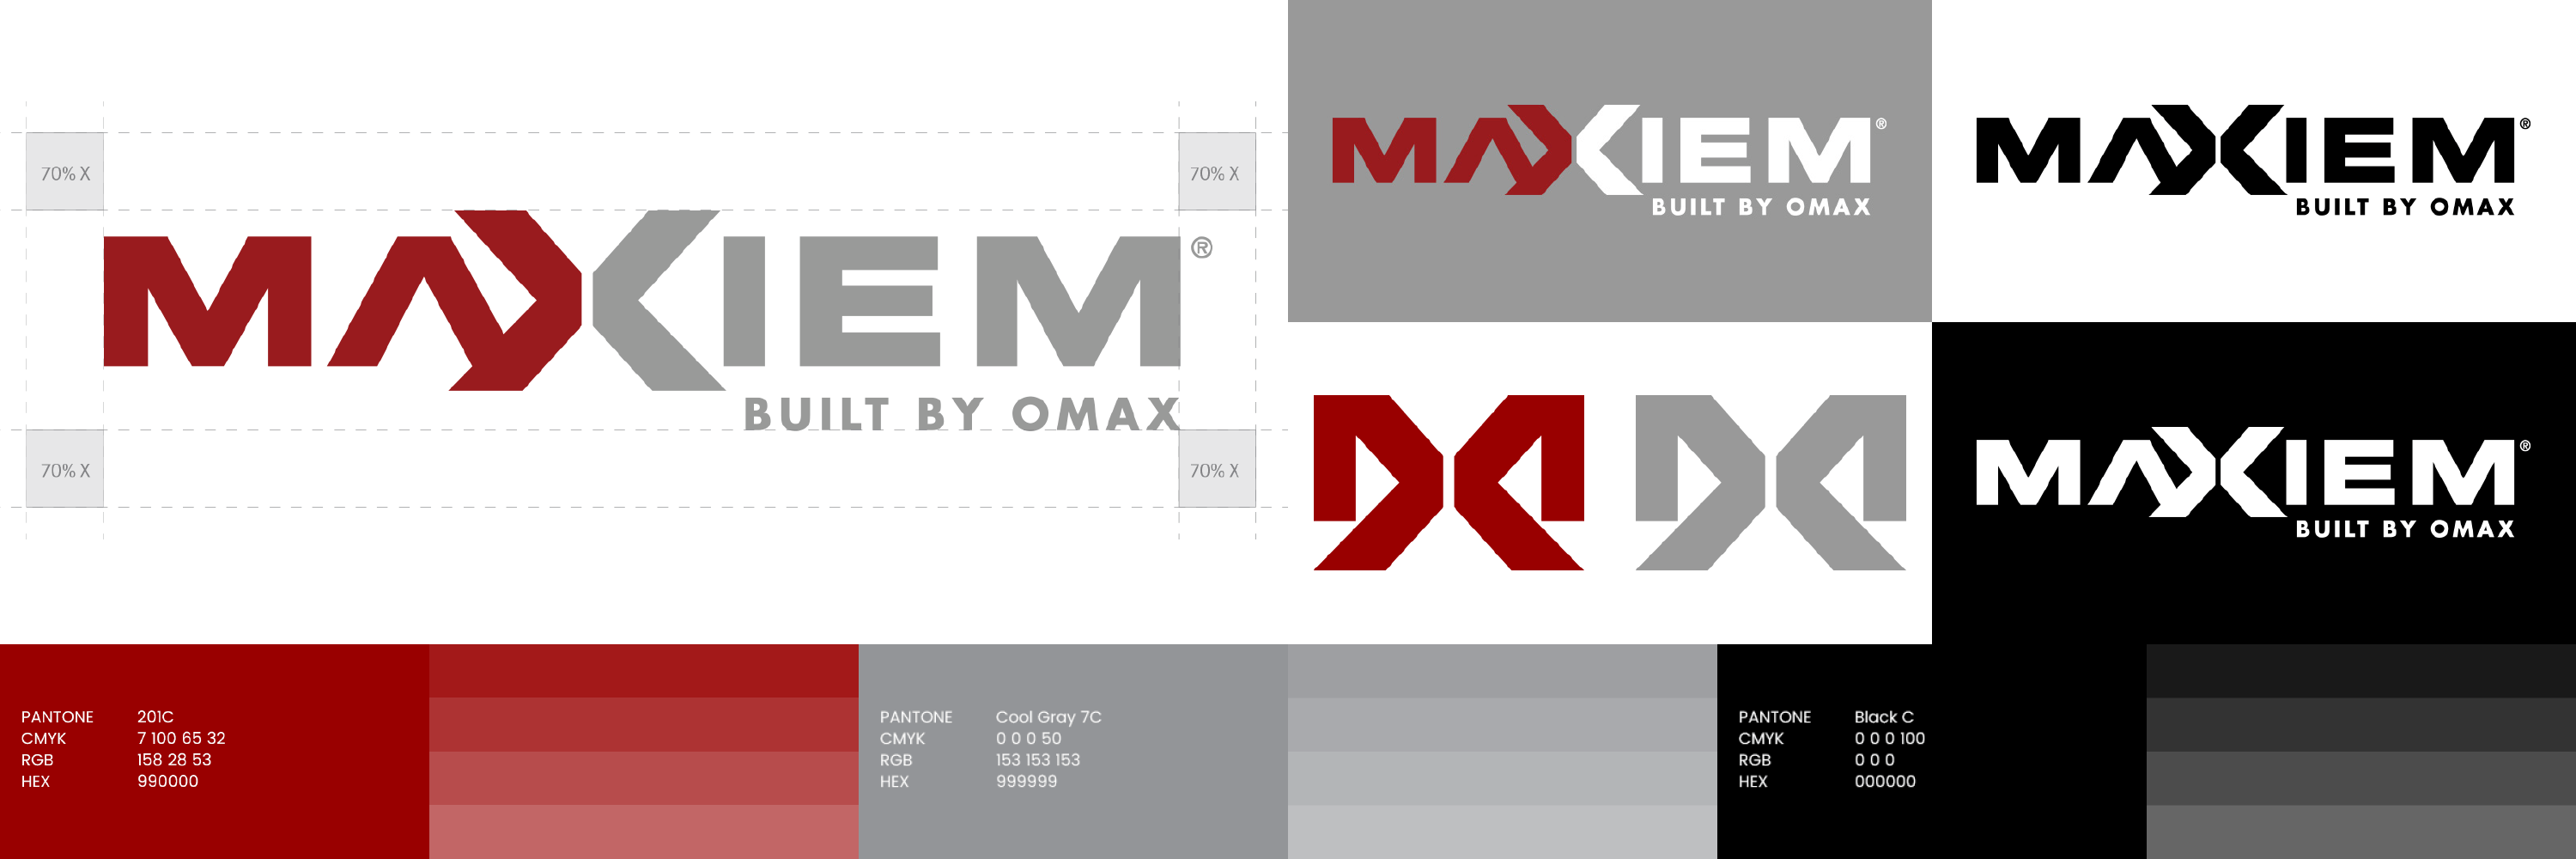 omax-maxiem-branding-style-guide